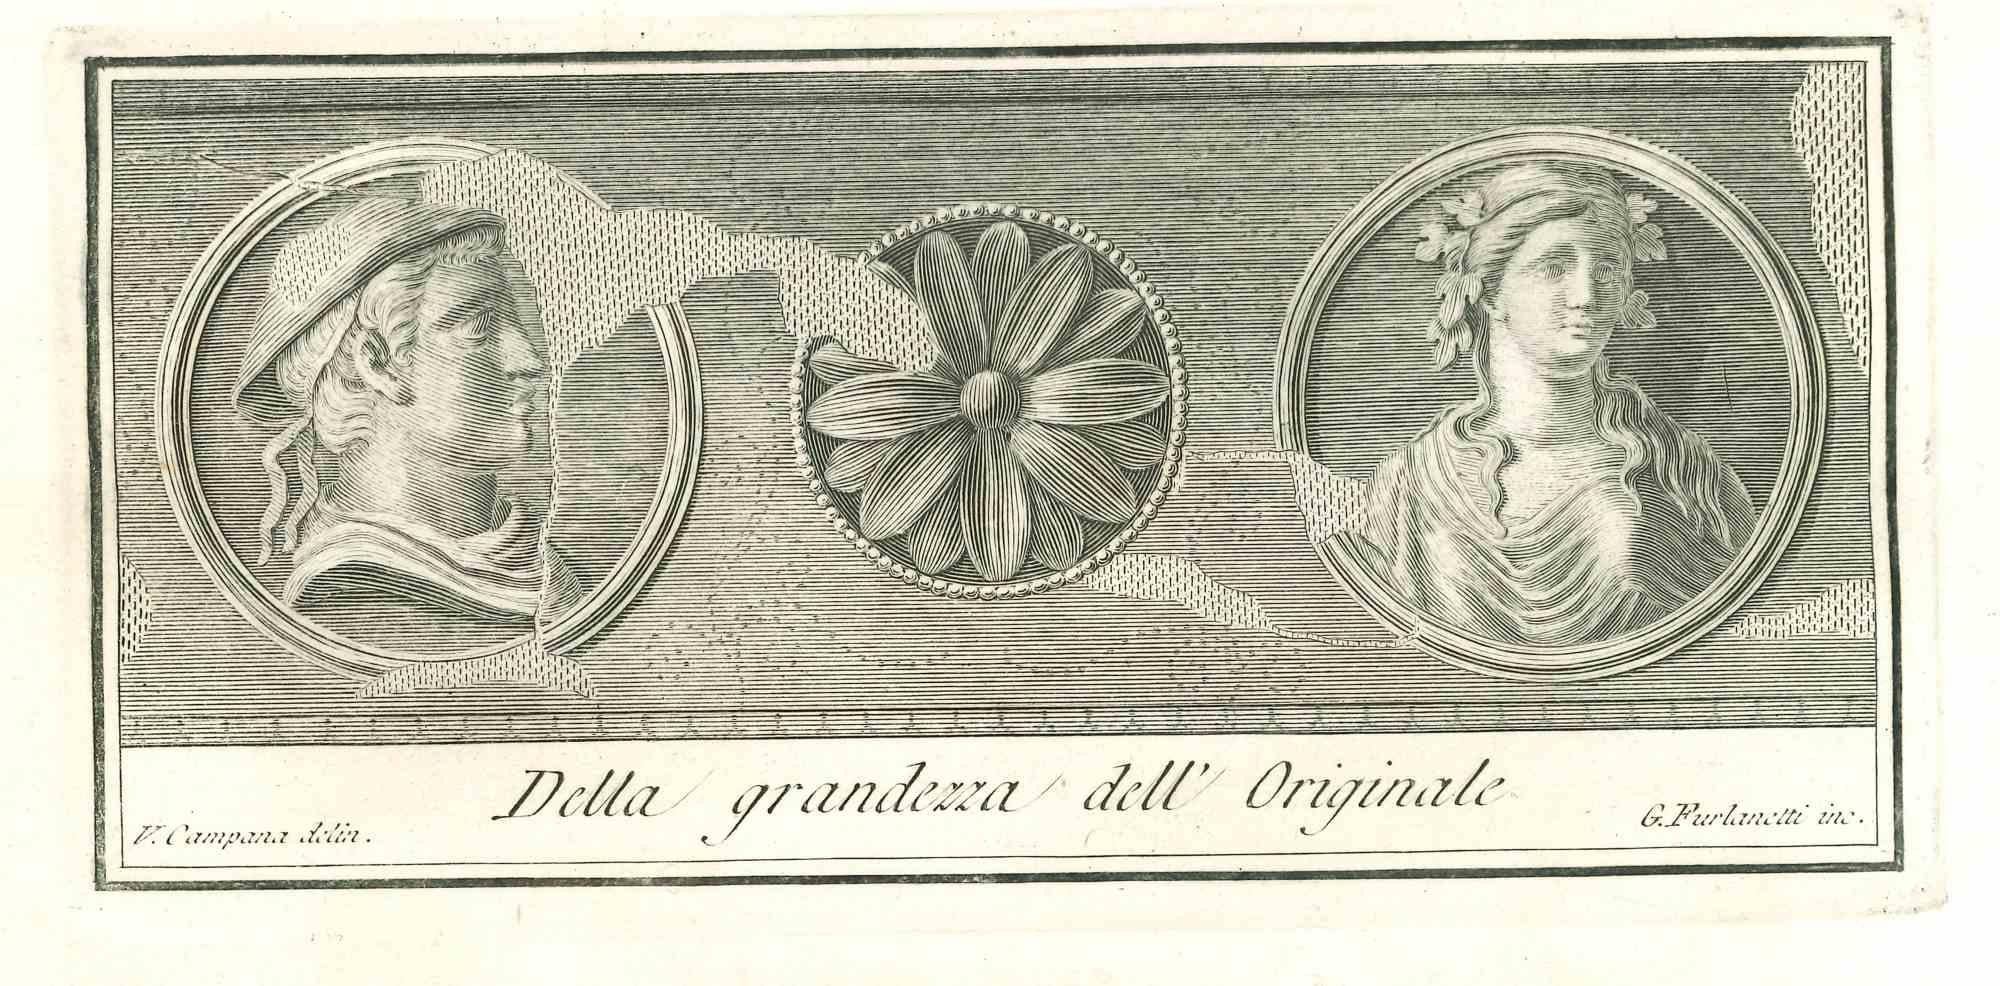 Giuseppe Furlanetti Figurative Print - Ancient Roman Fresco - Etching by G. Furlanetti - 18th Century